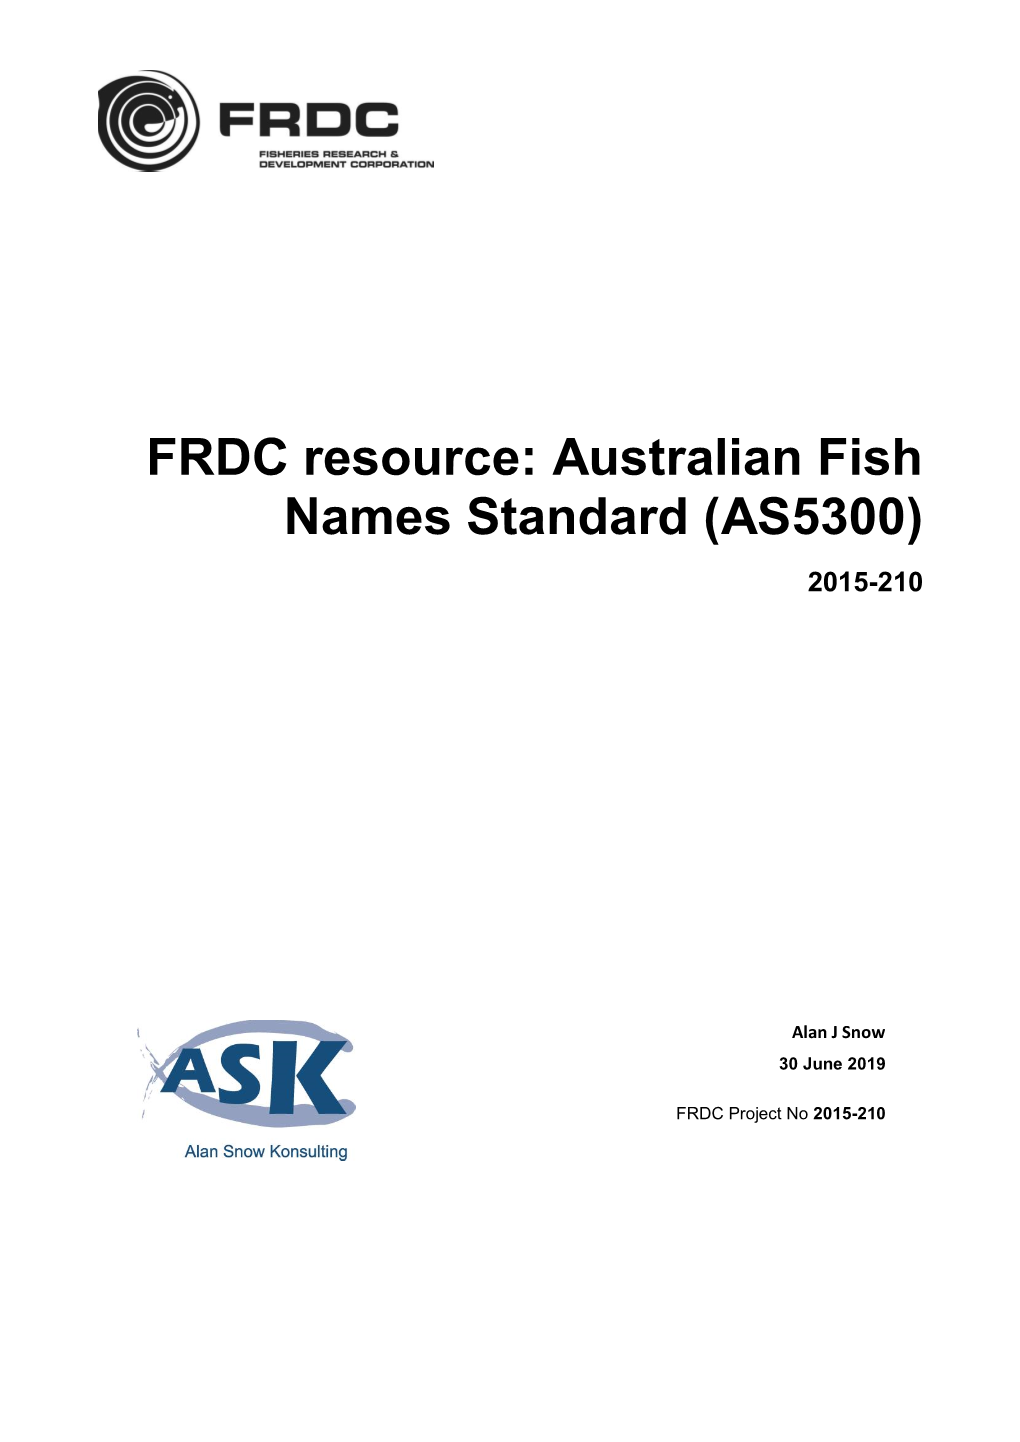 FRDC Resource: Australian Fish Names Standard (AS5300) 2015-210